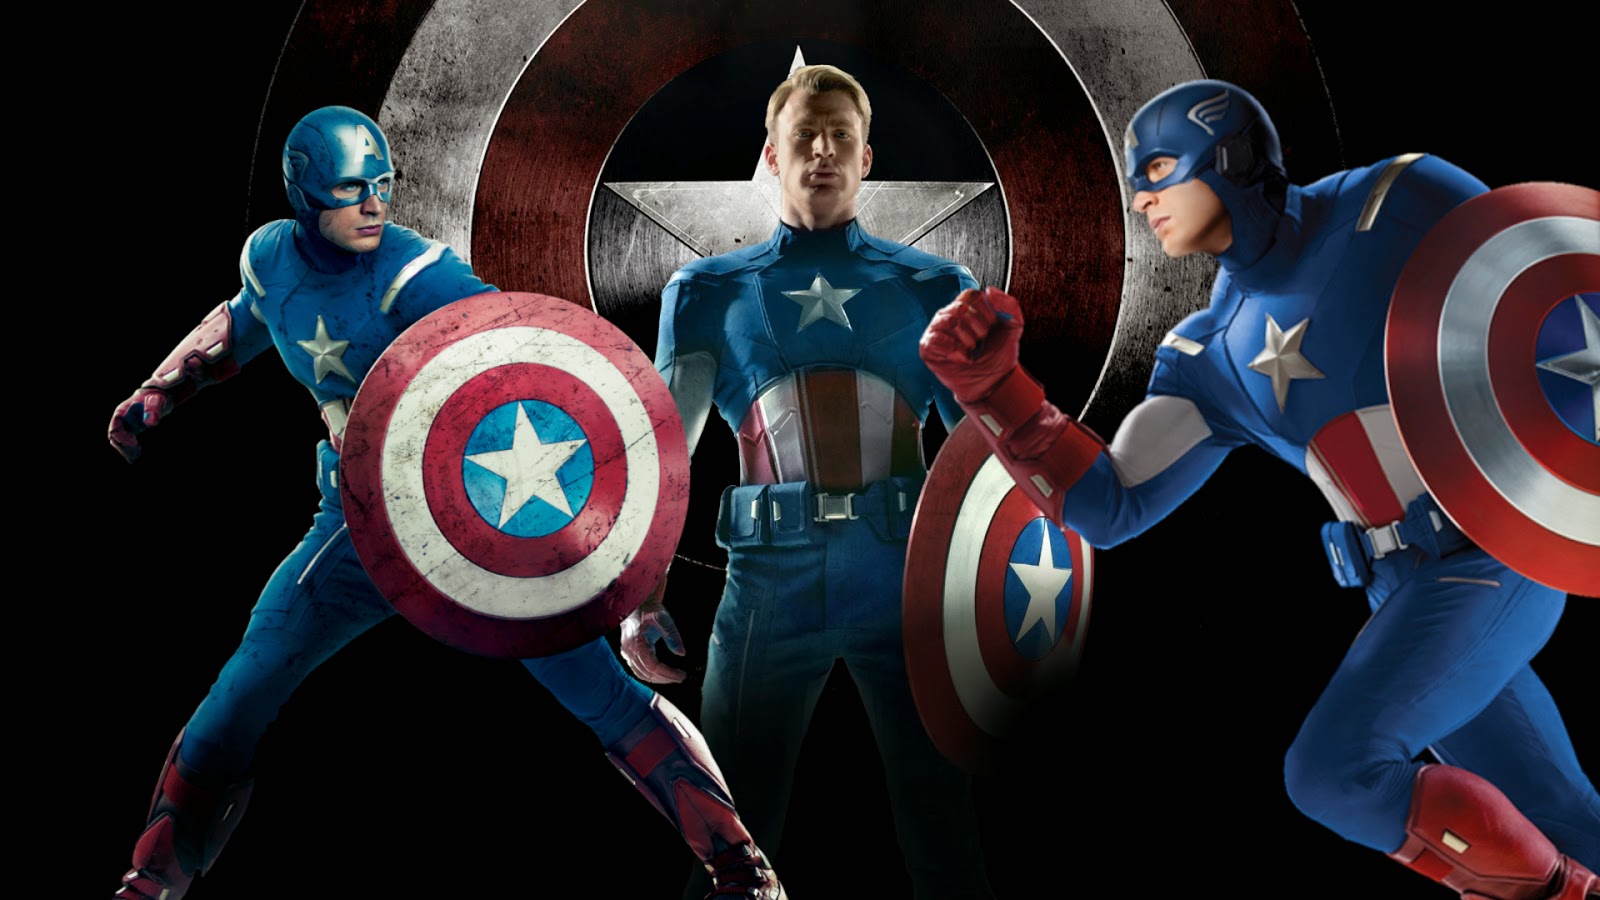 capitão america wallpaper,captain america,superhero,hero,fictional character,action figure